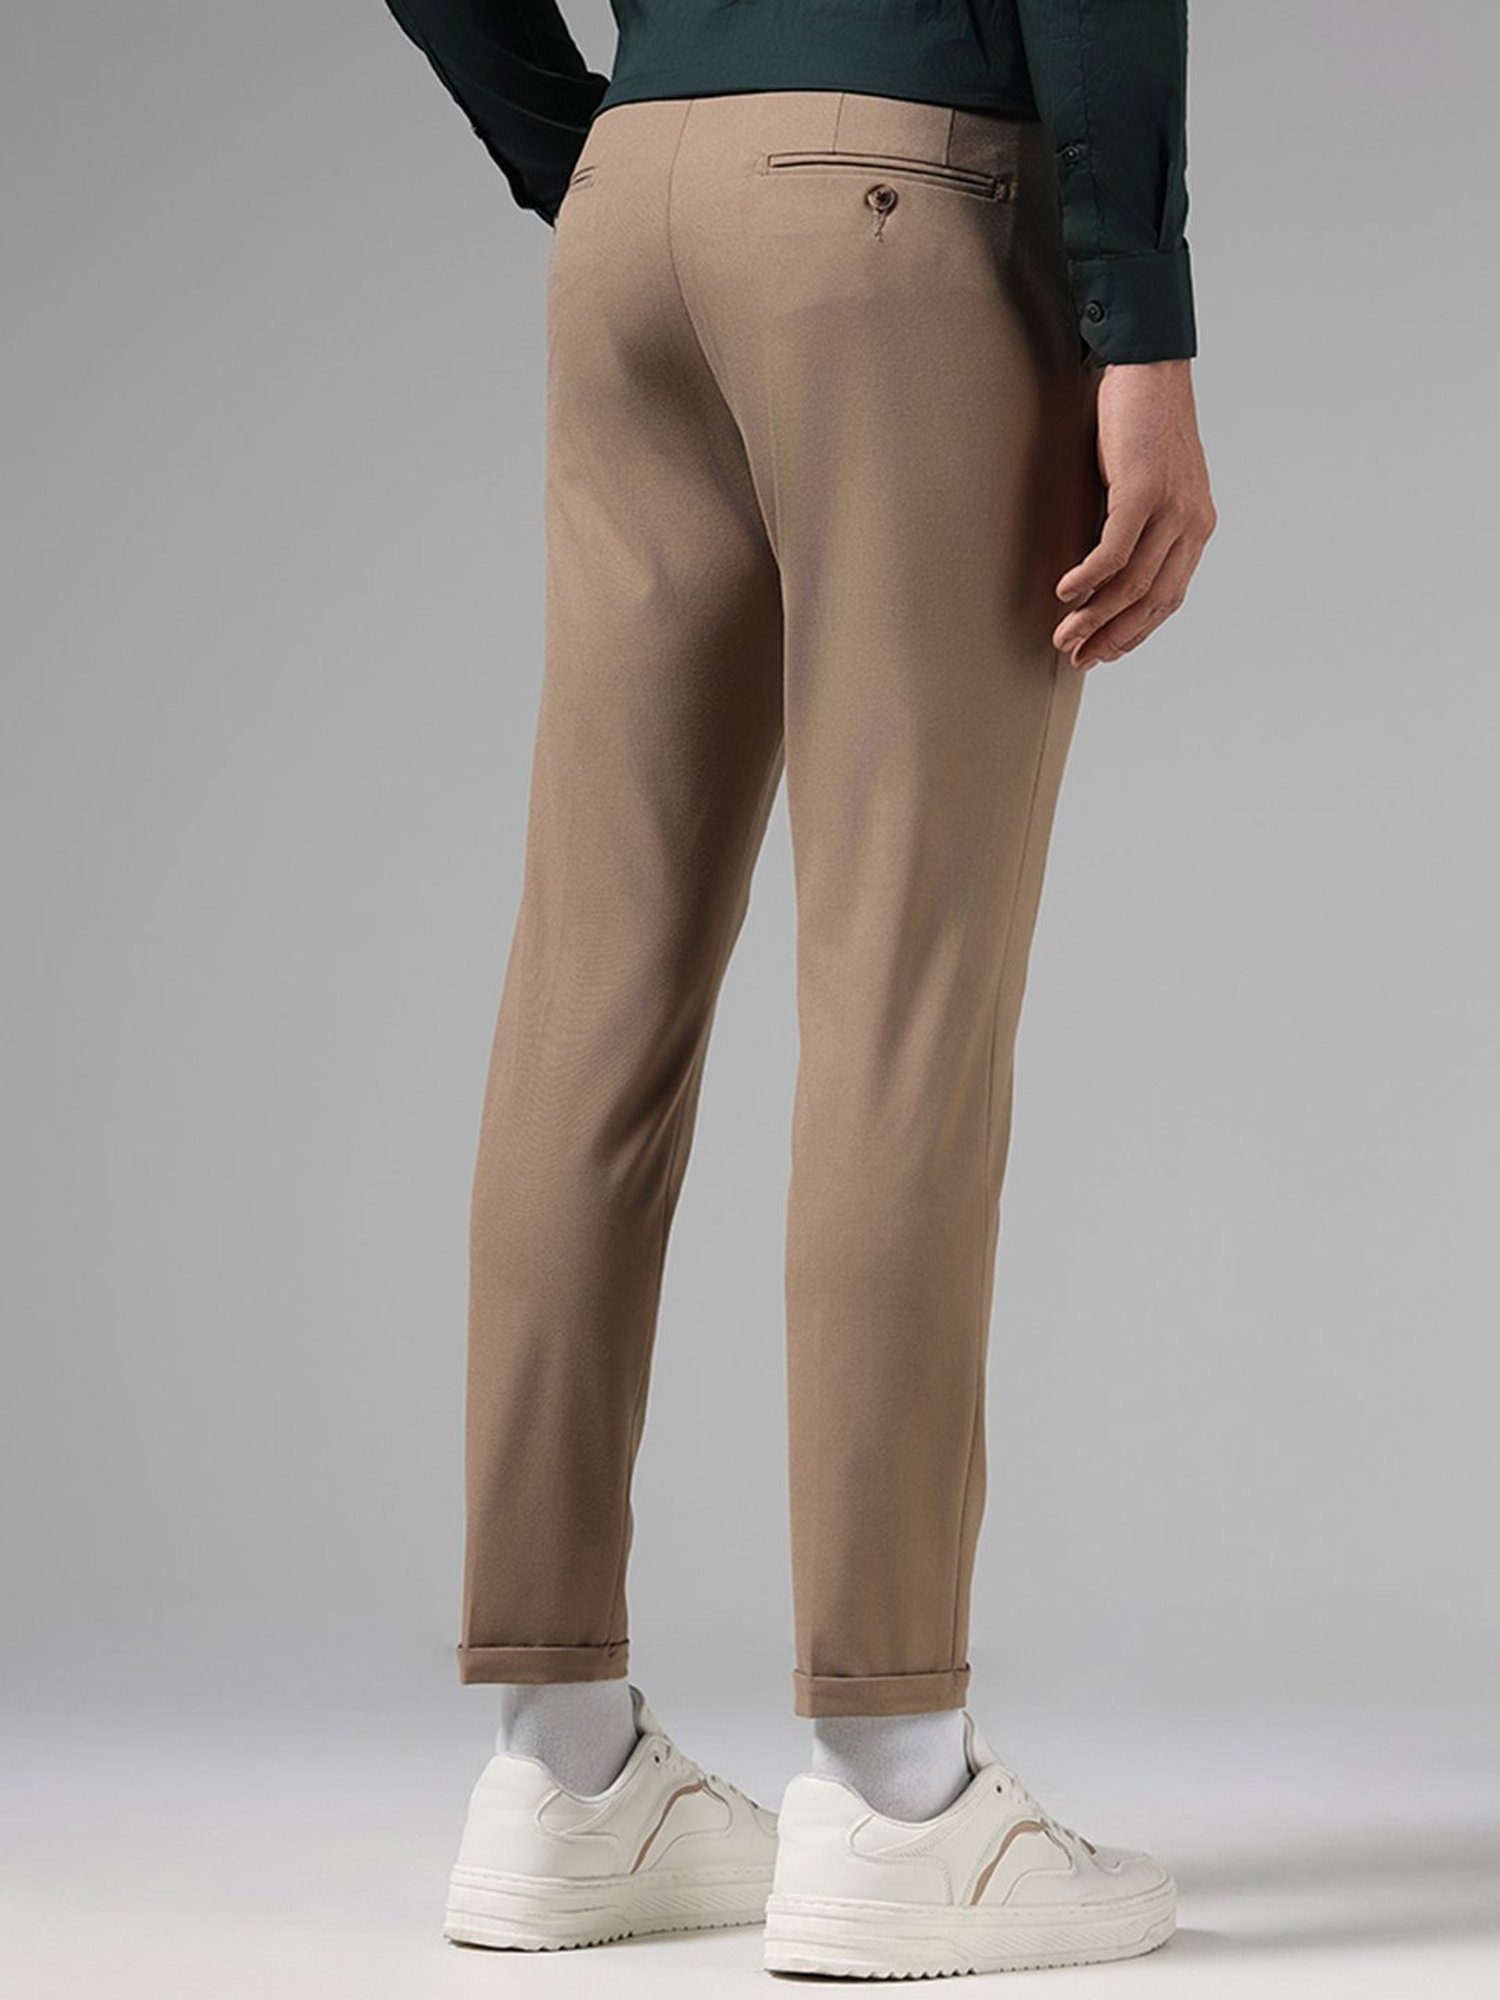 Buy Max Men's Regular Pants (TFCKBFS2101CT_Grey_40) at Amazon.in